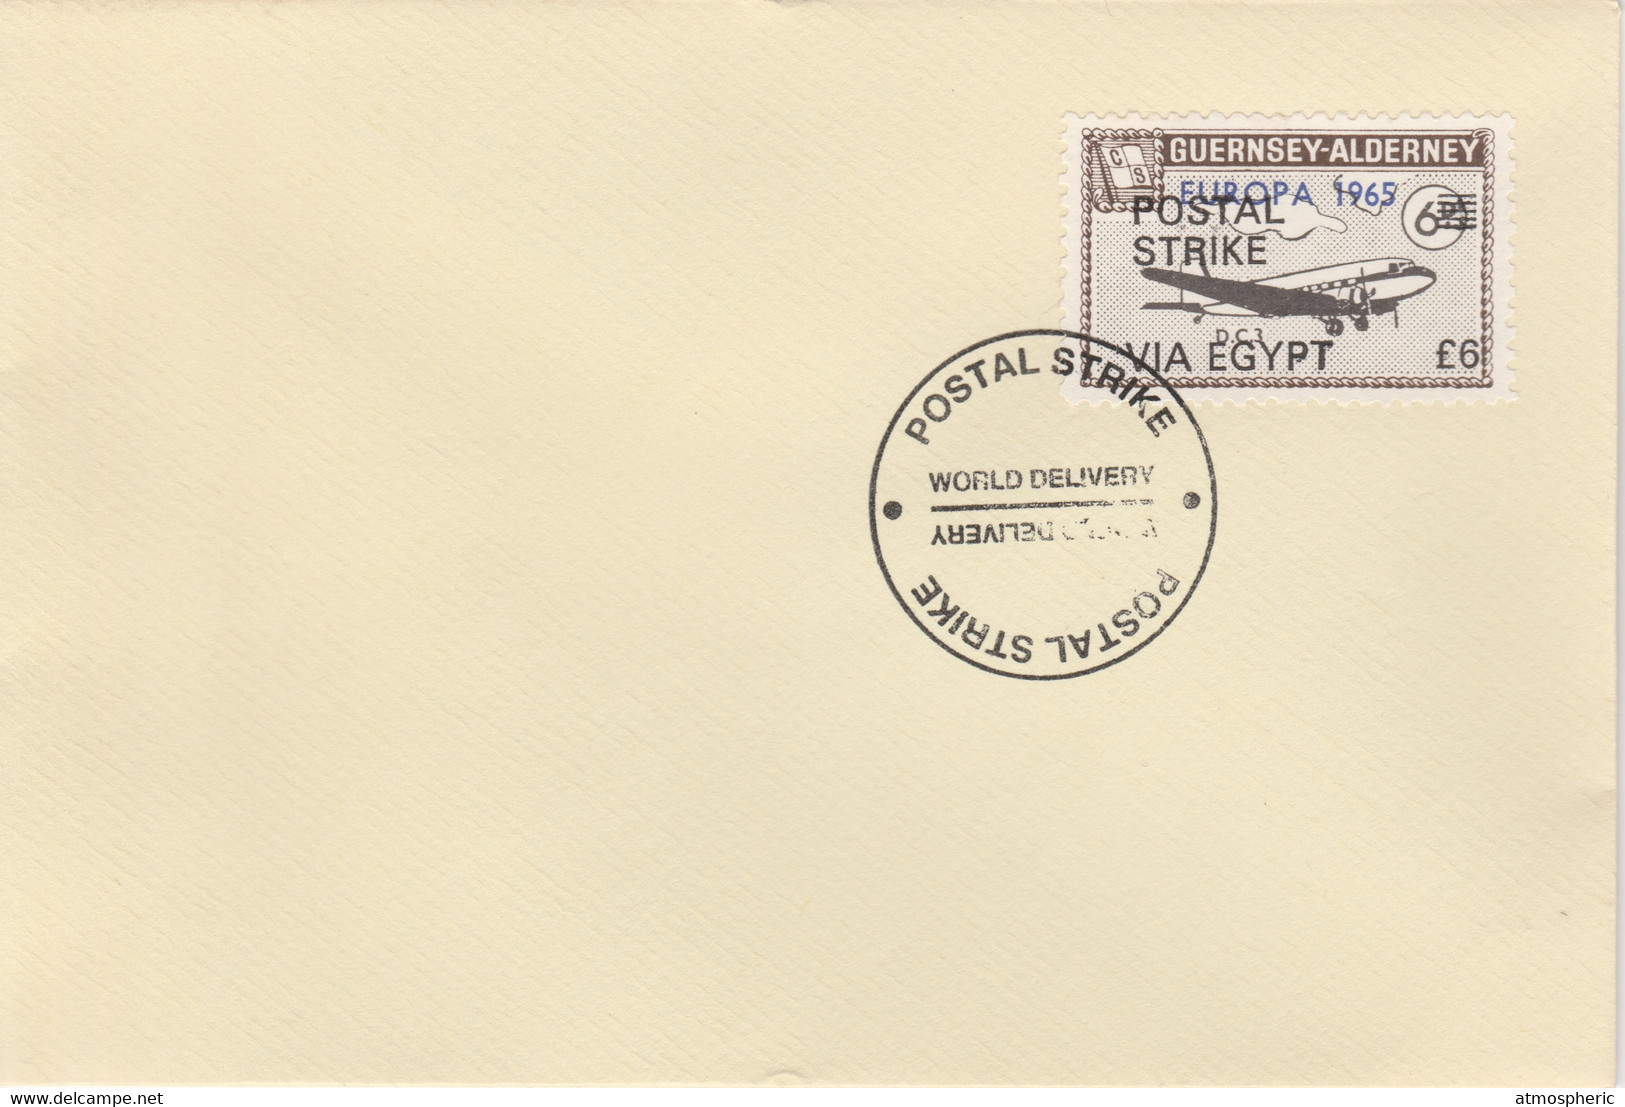 Guernsey - Alderney 1971 Postal Strike Cover To Egypt Bearing DC-3 6d Overprinted Europa 1965 - Non Classificati